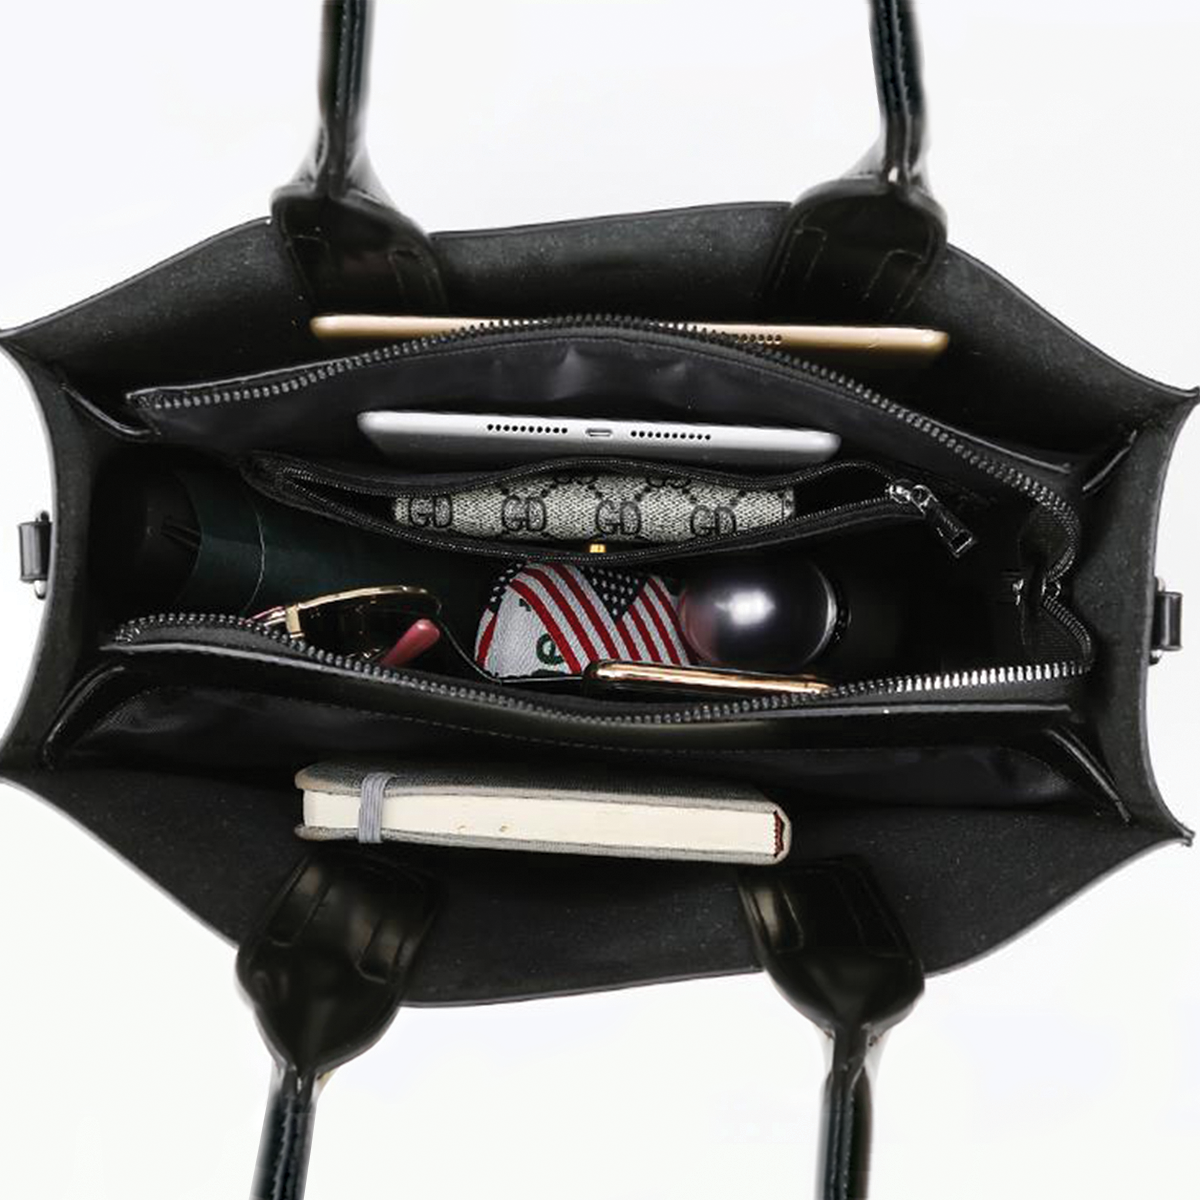 French Bulldog Luxury Handbag V1